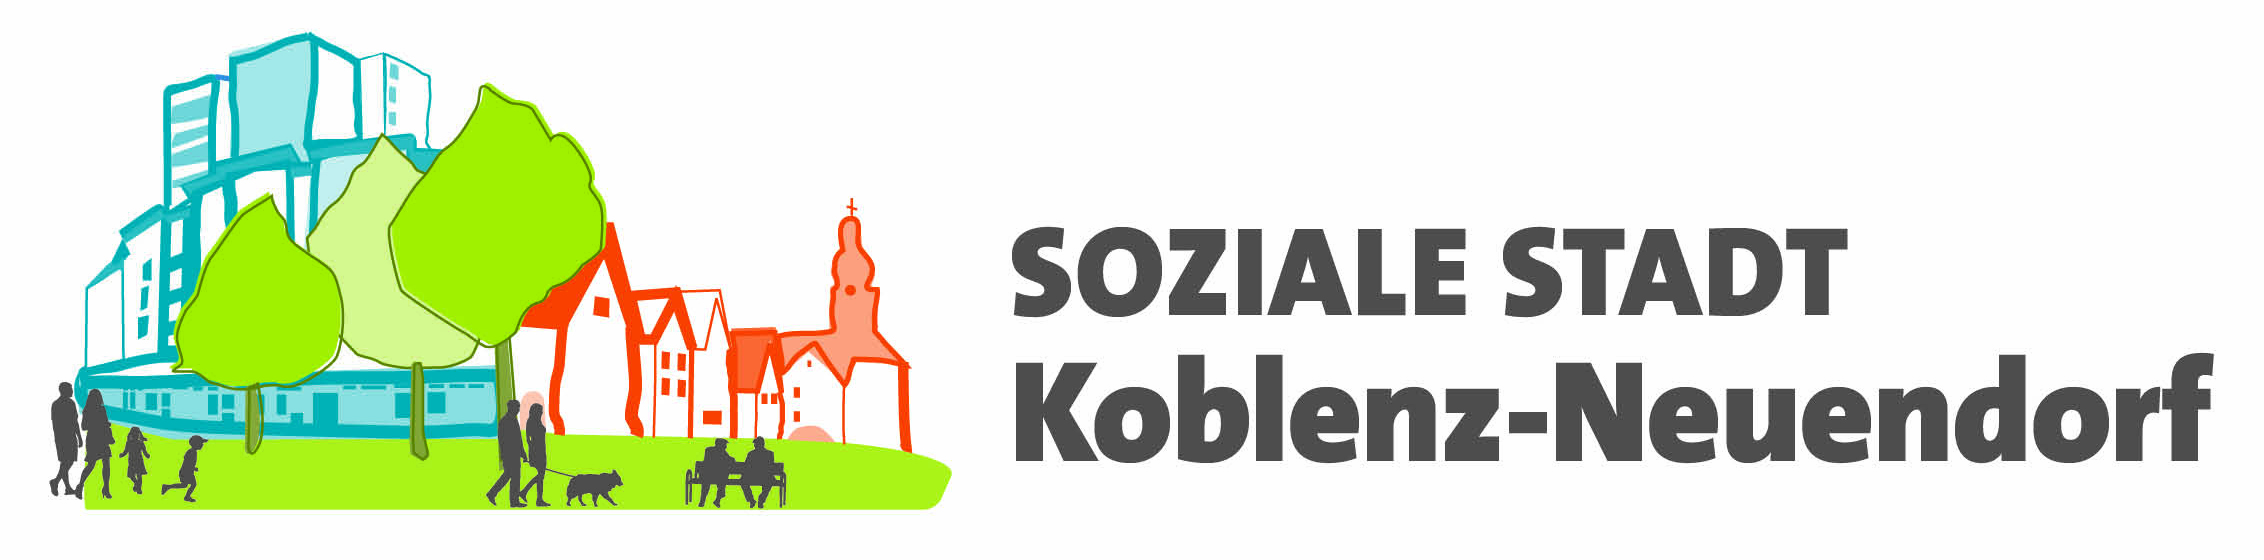 Koblenz_Neuendorf_Logo_quer (1)